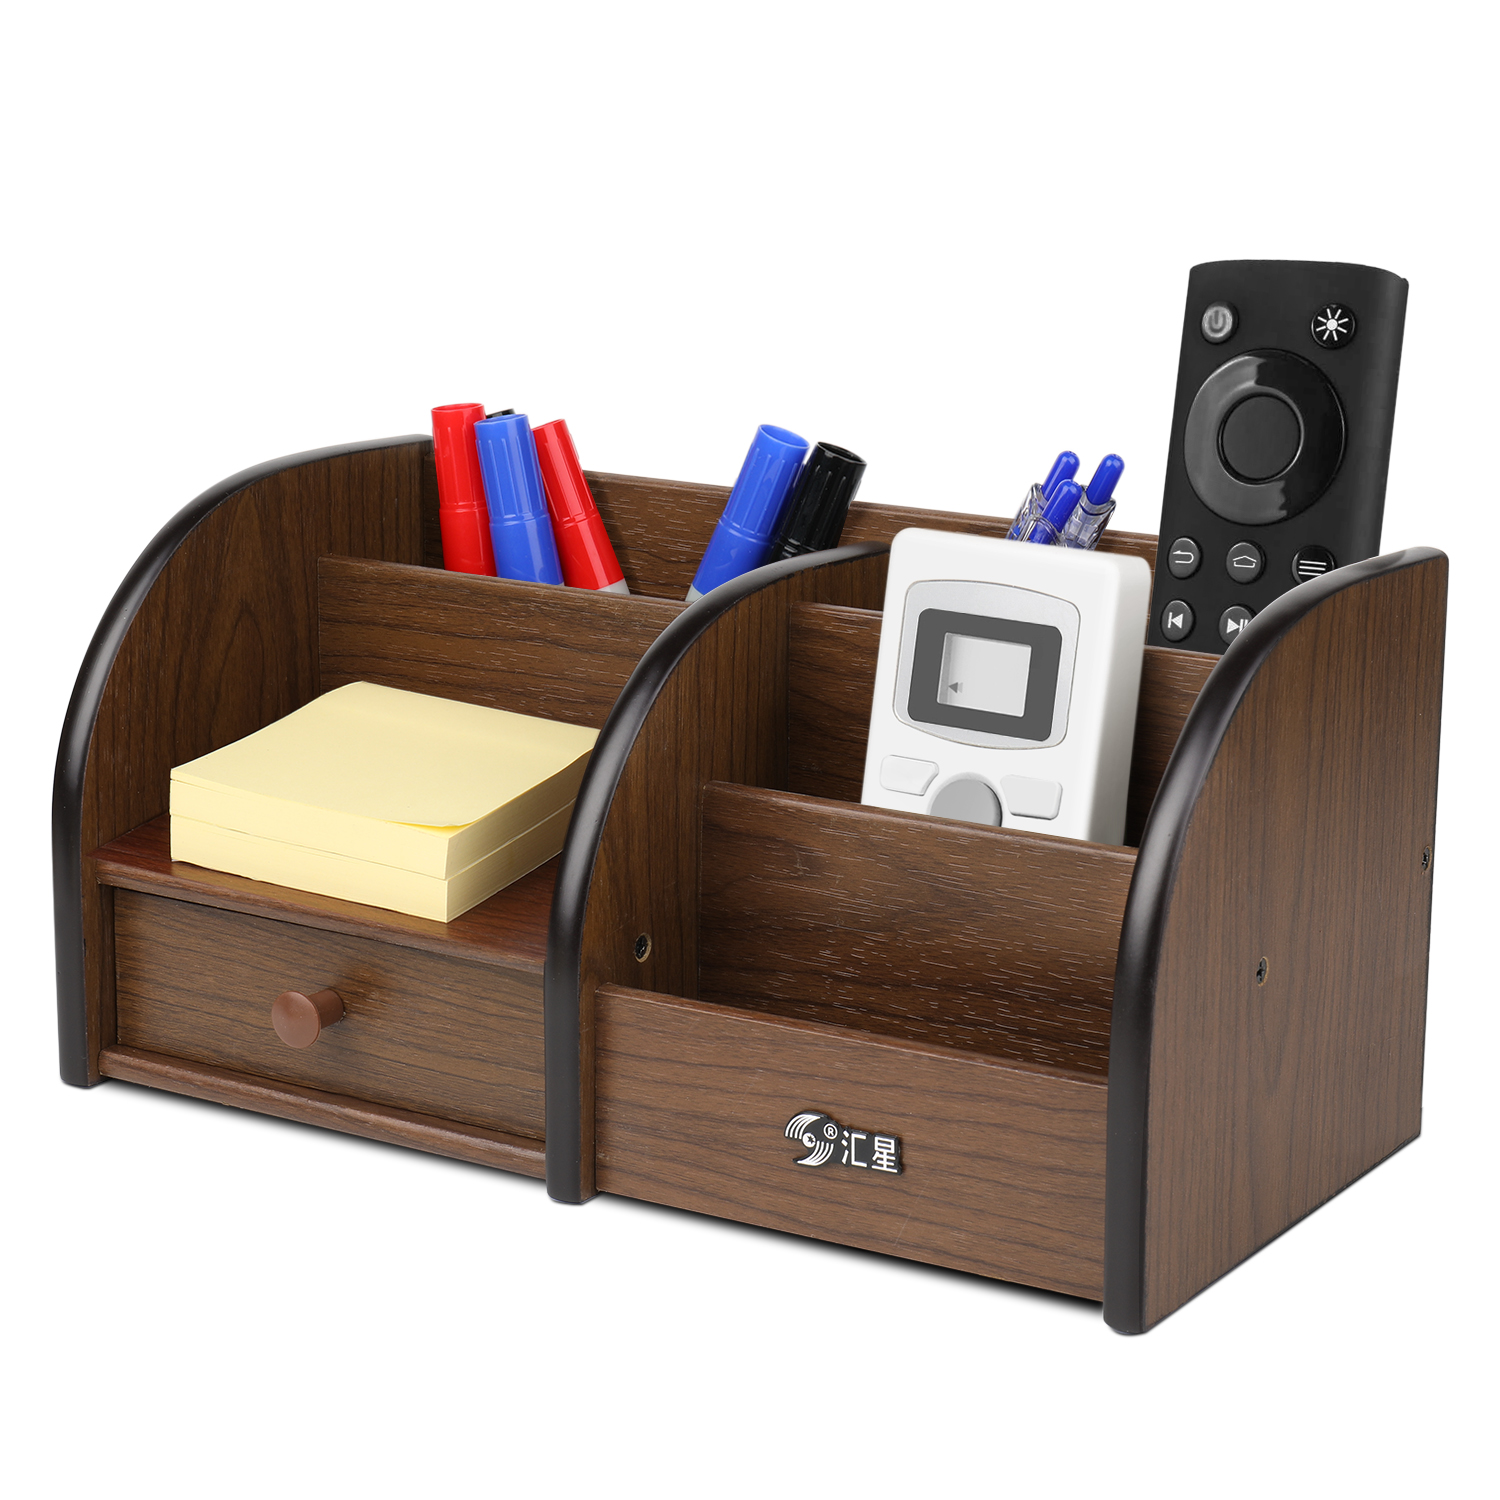 CE Compass Wooden Desk Organizer w/ Drawers - Classic Wood Desktop Tabletop Sorter Shelf Rack Cherry Brown Pen Holder Stationary Storage